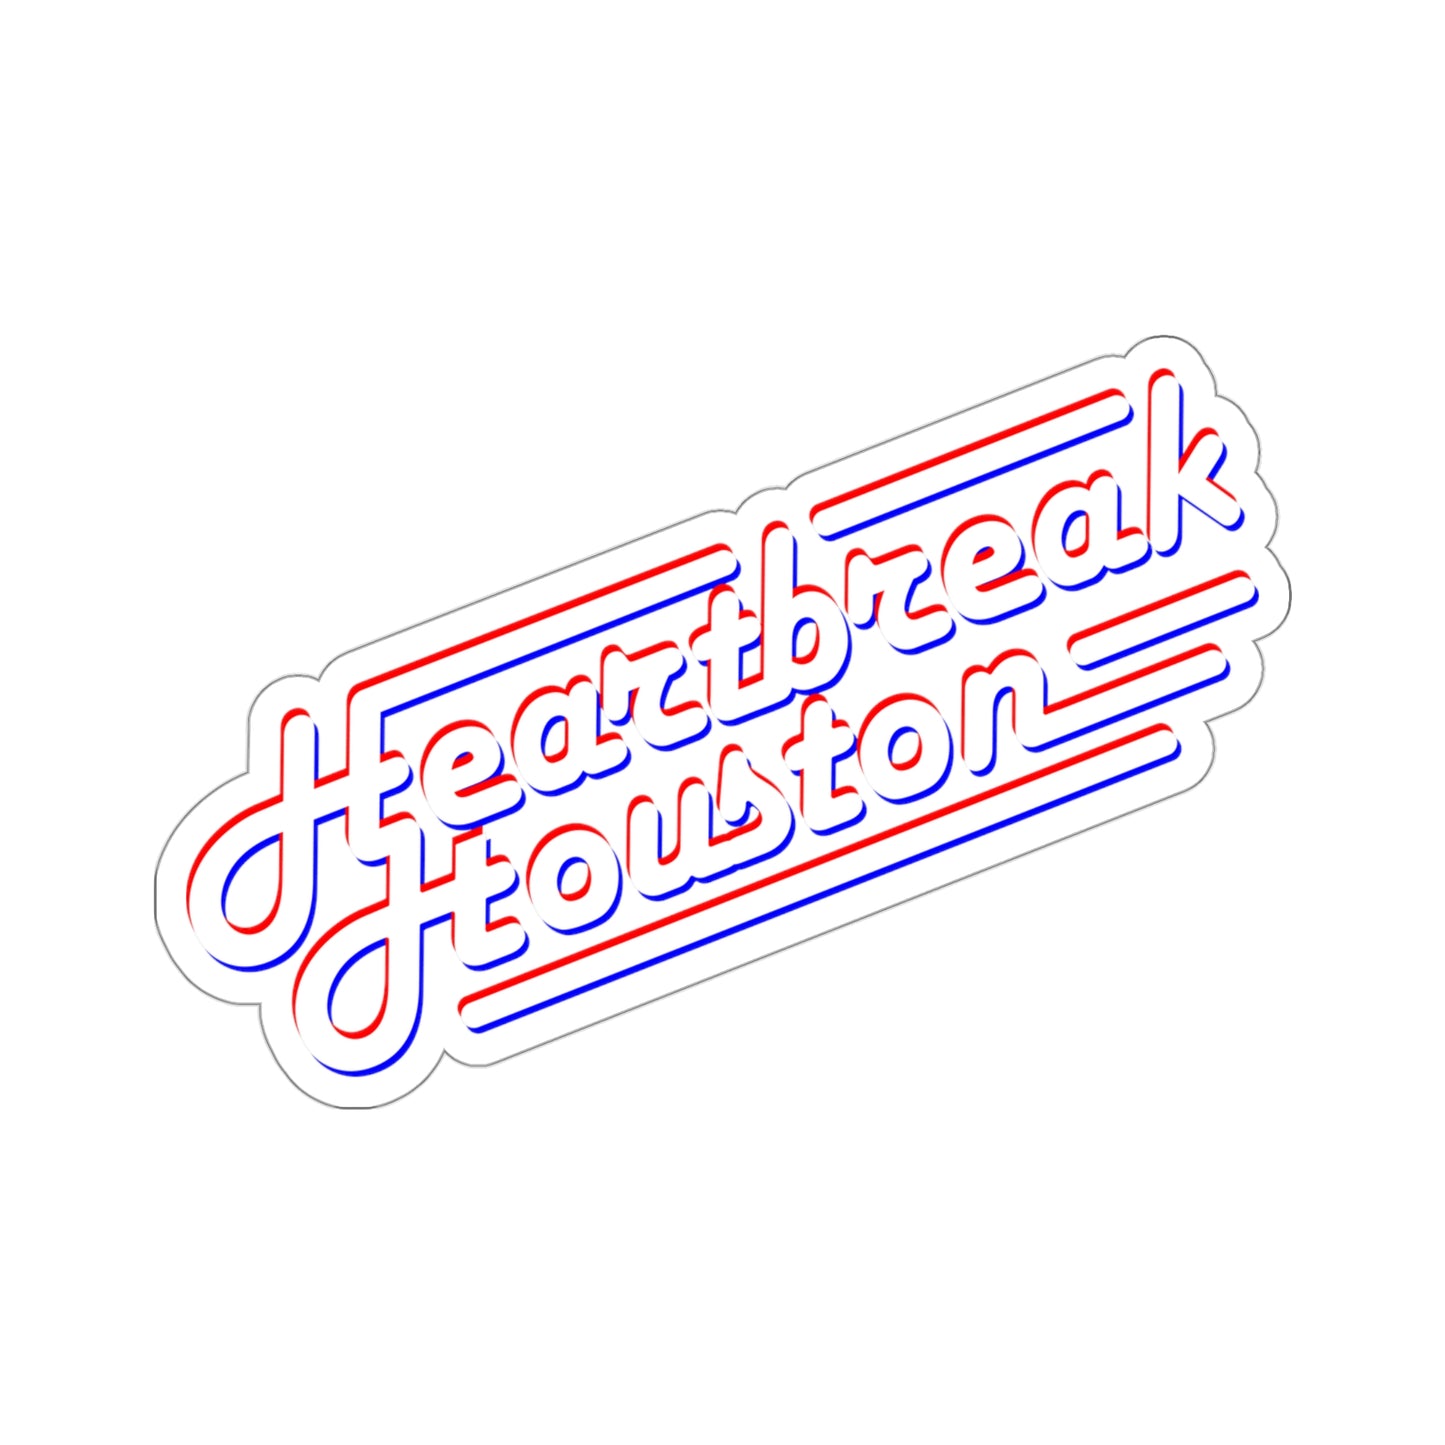 Heartbreak Houston Kiss-Cut Sticker (white)